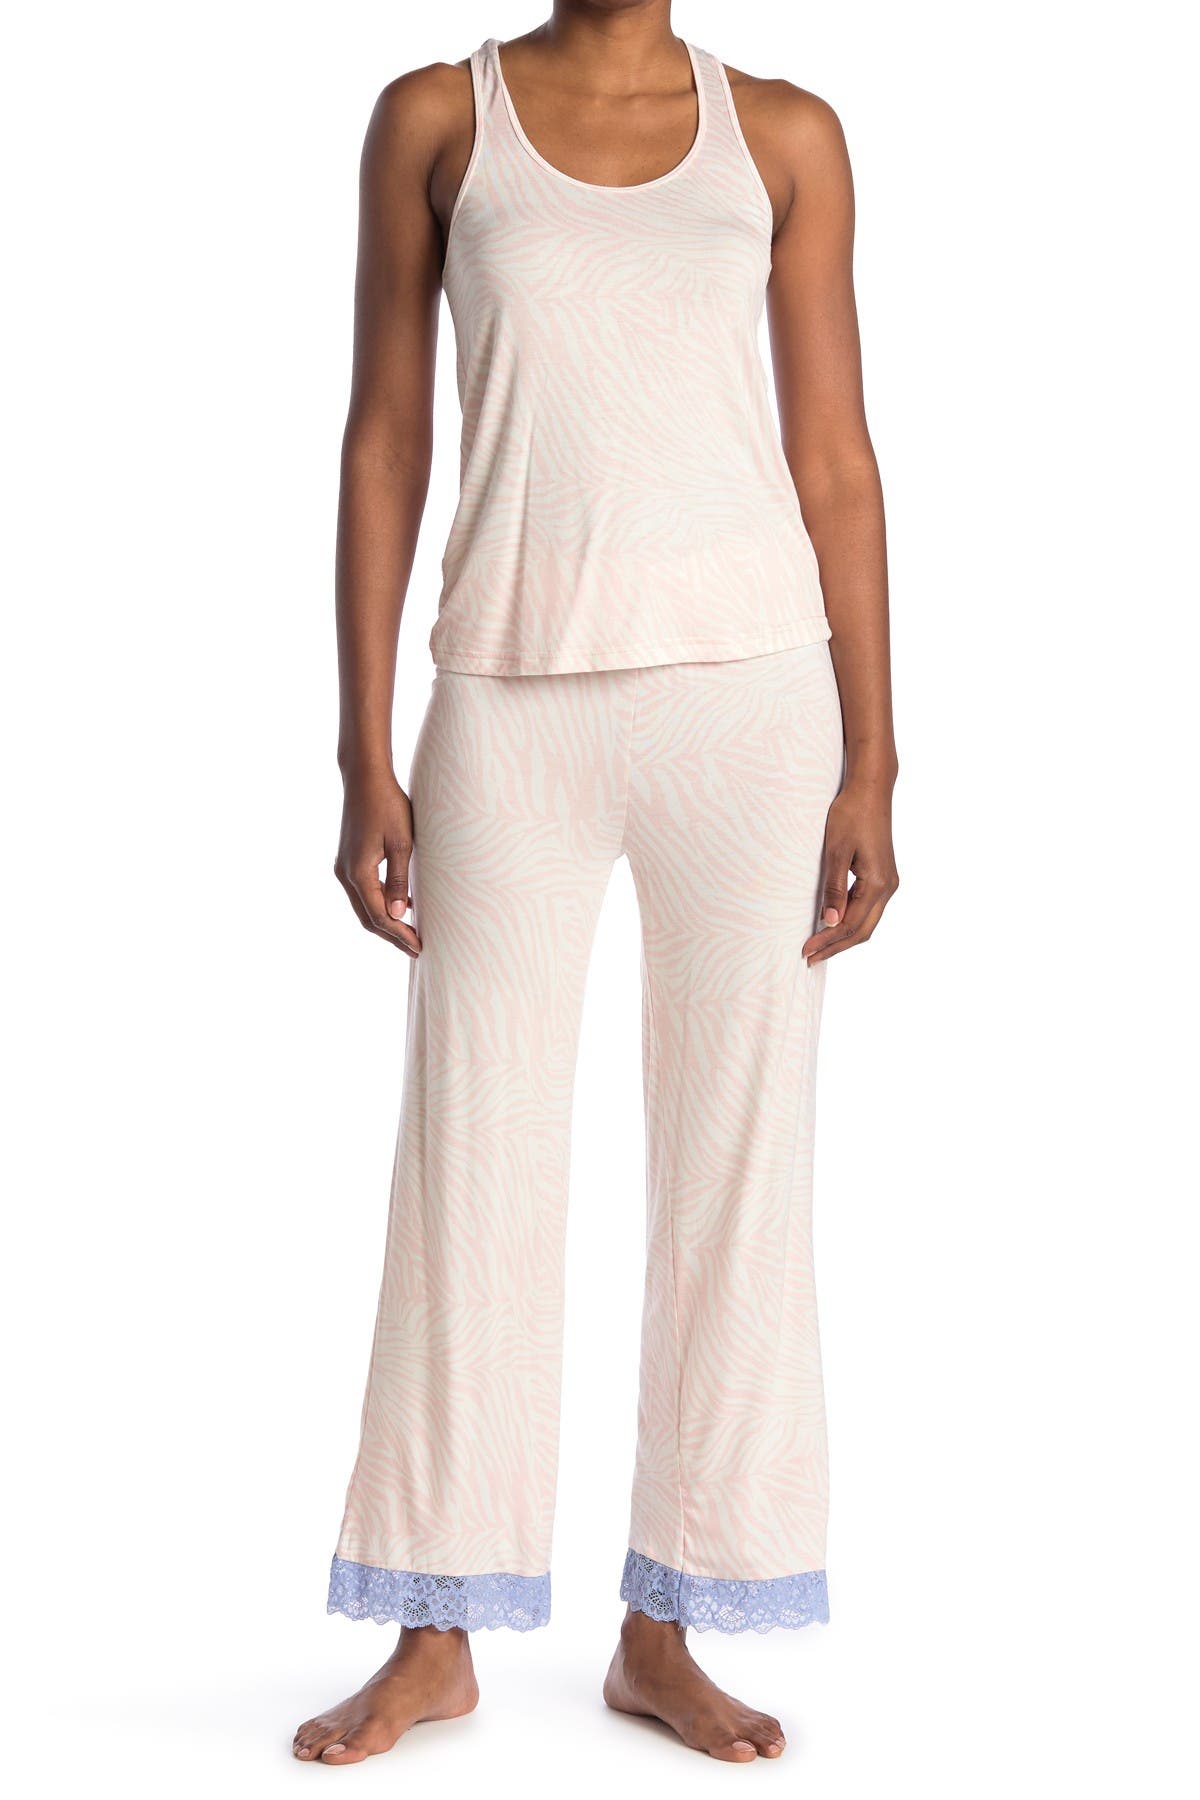 Honeydew Intimates Striped Lace Trim Tank & Pants 2-piece Pajama Set In Ivoryzebra